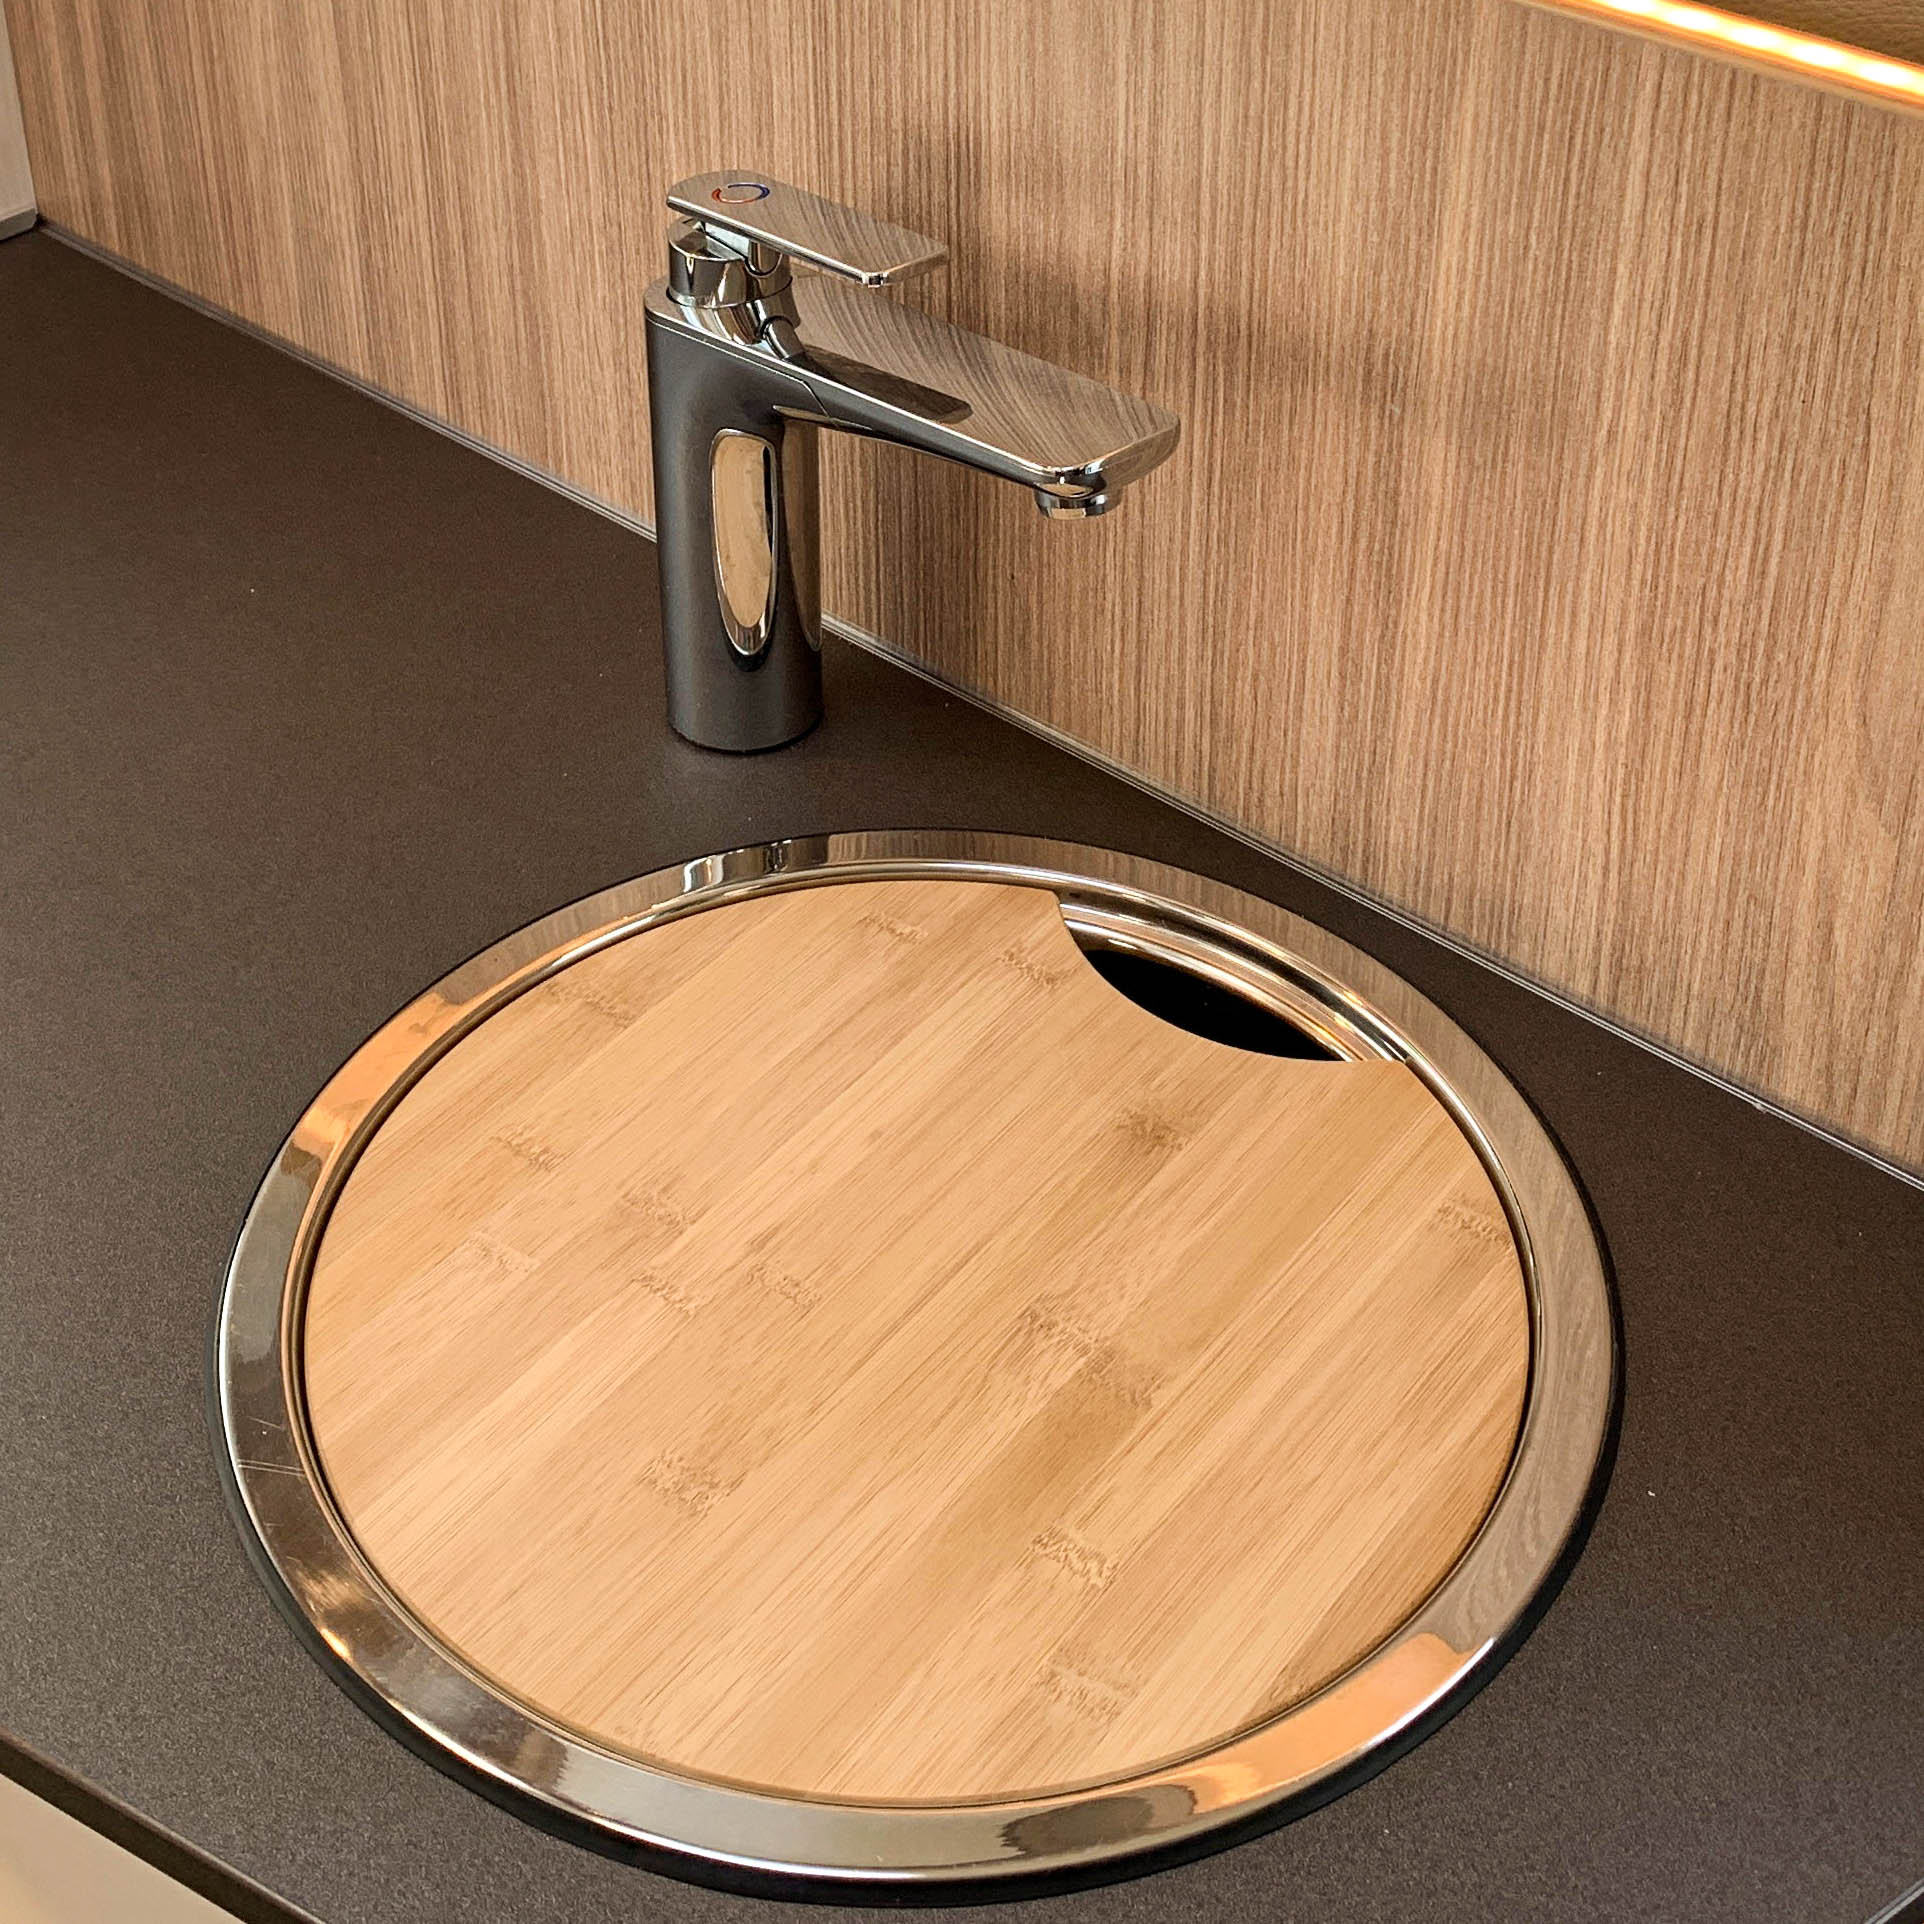 Cutting board with sink cover for Bürstner models